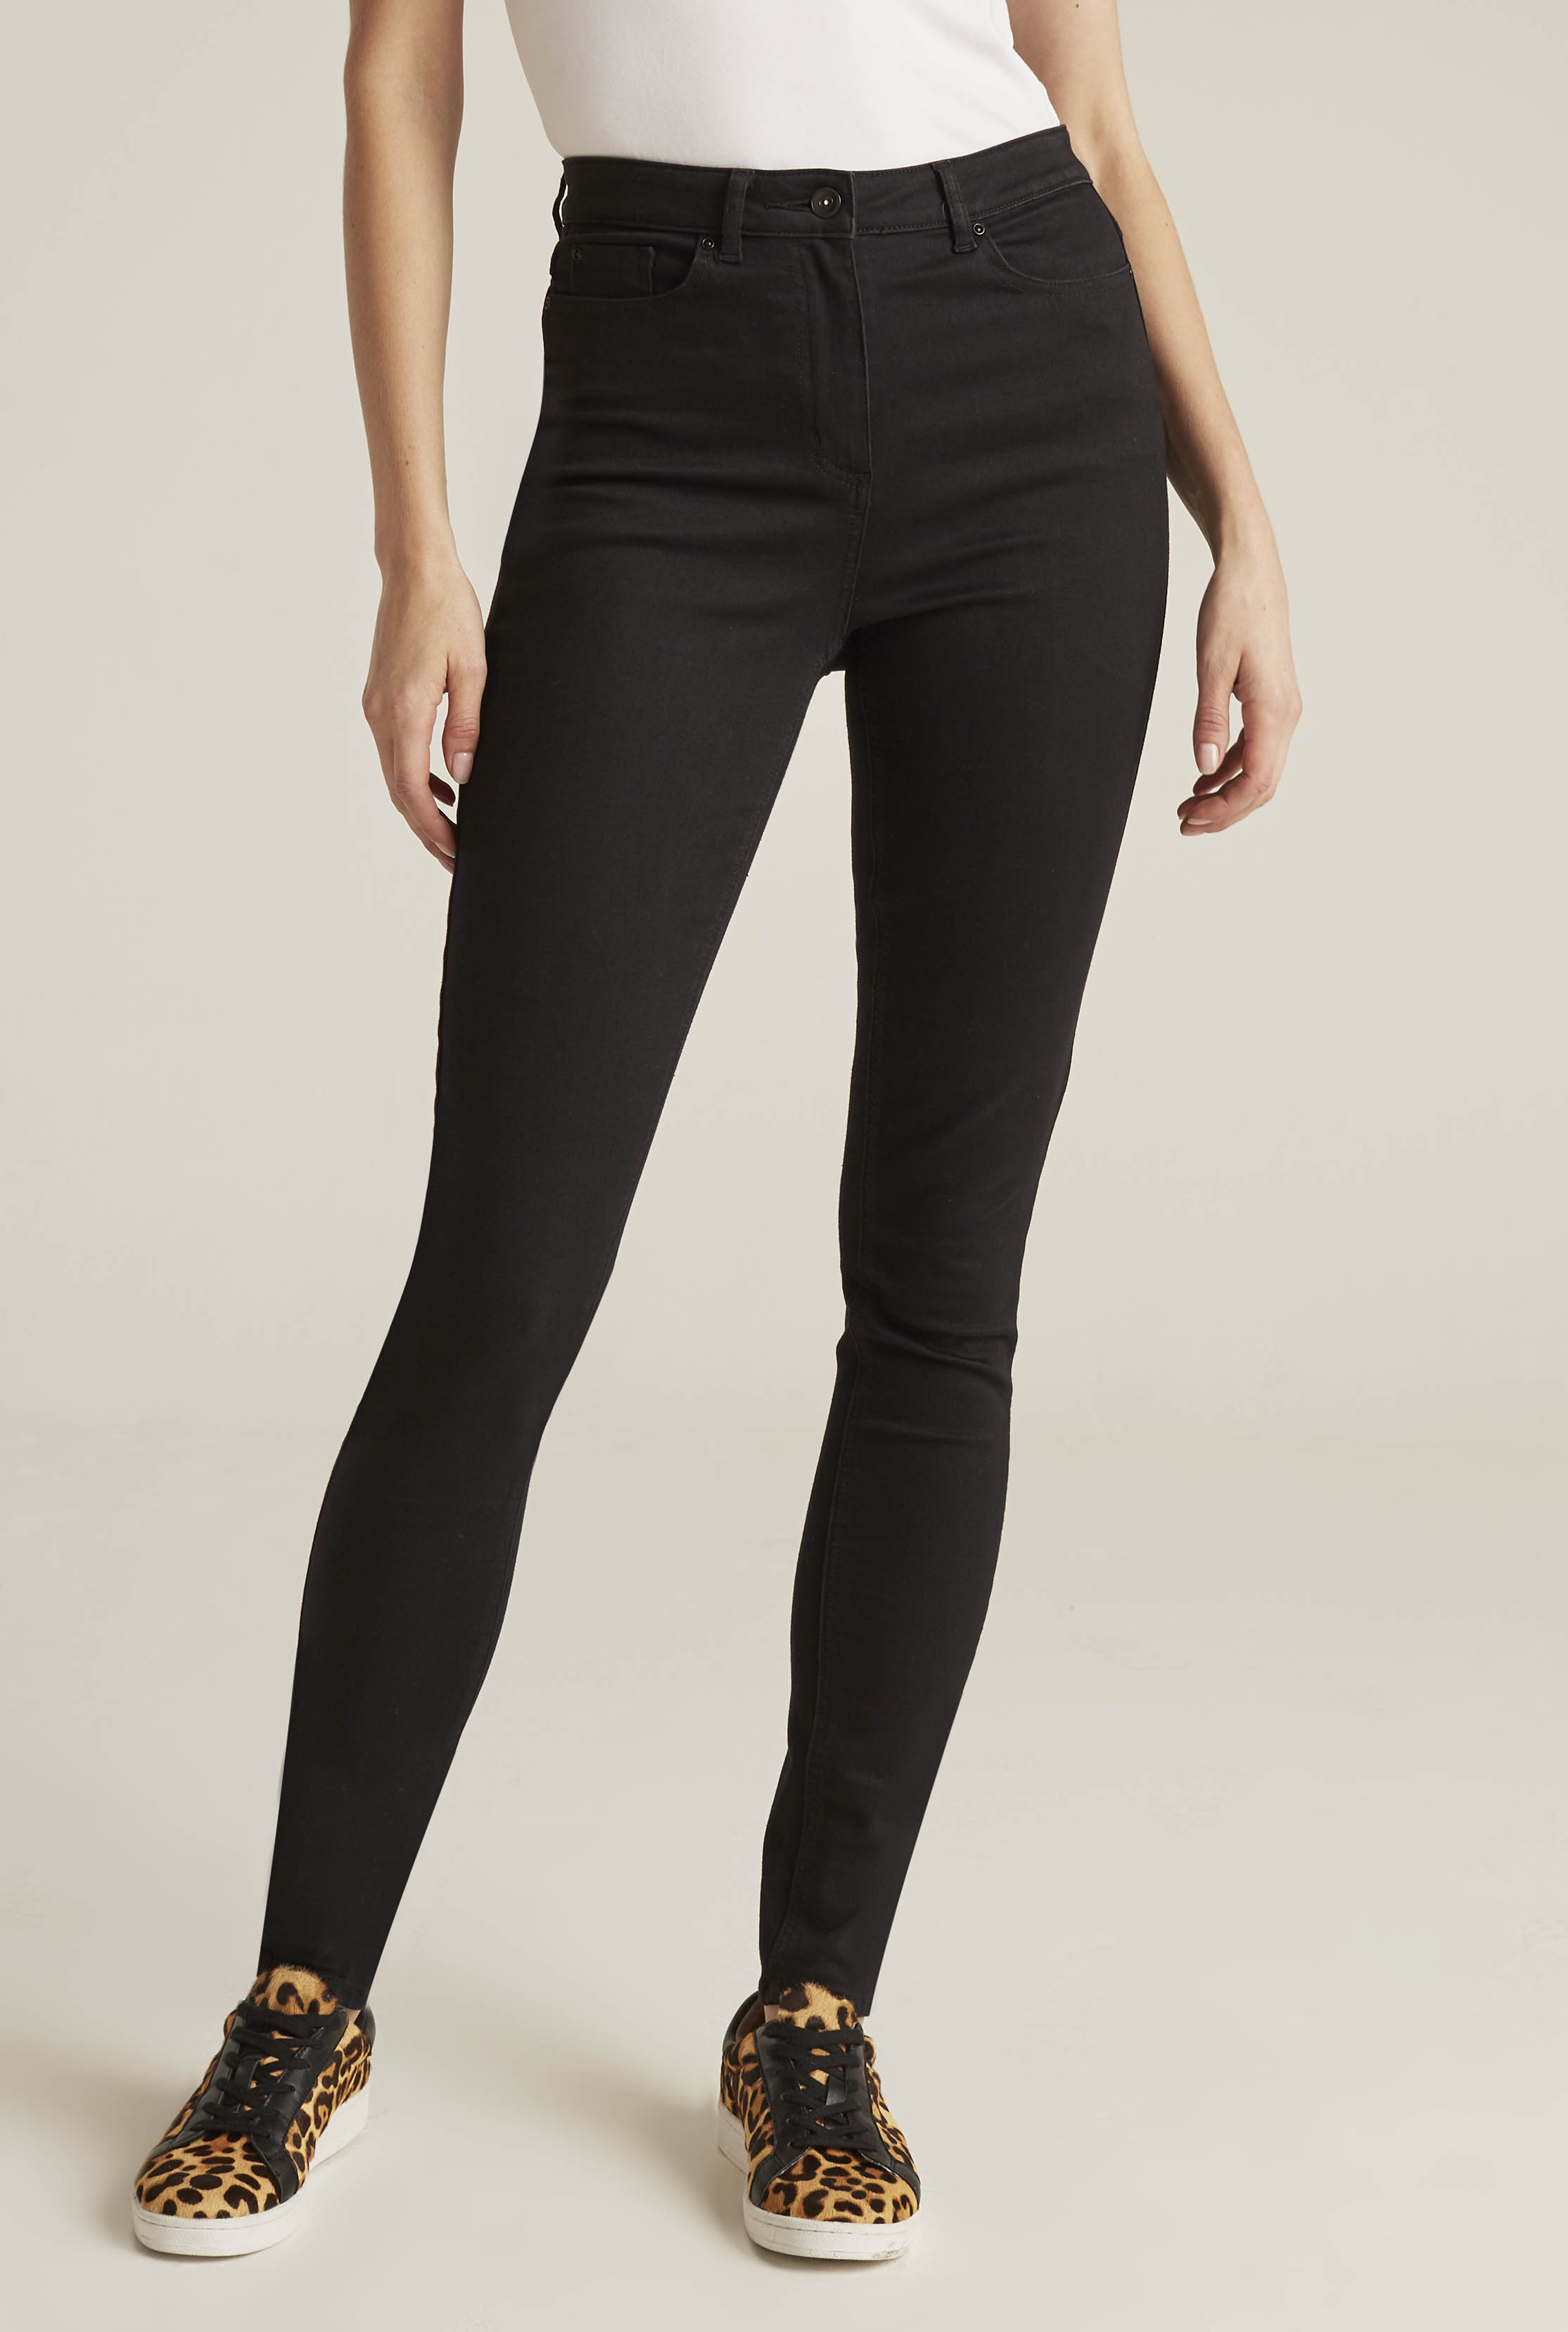 Black Powerstretch Super Skinny Jeans | Long Tall Sally